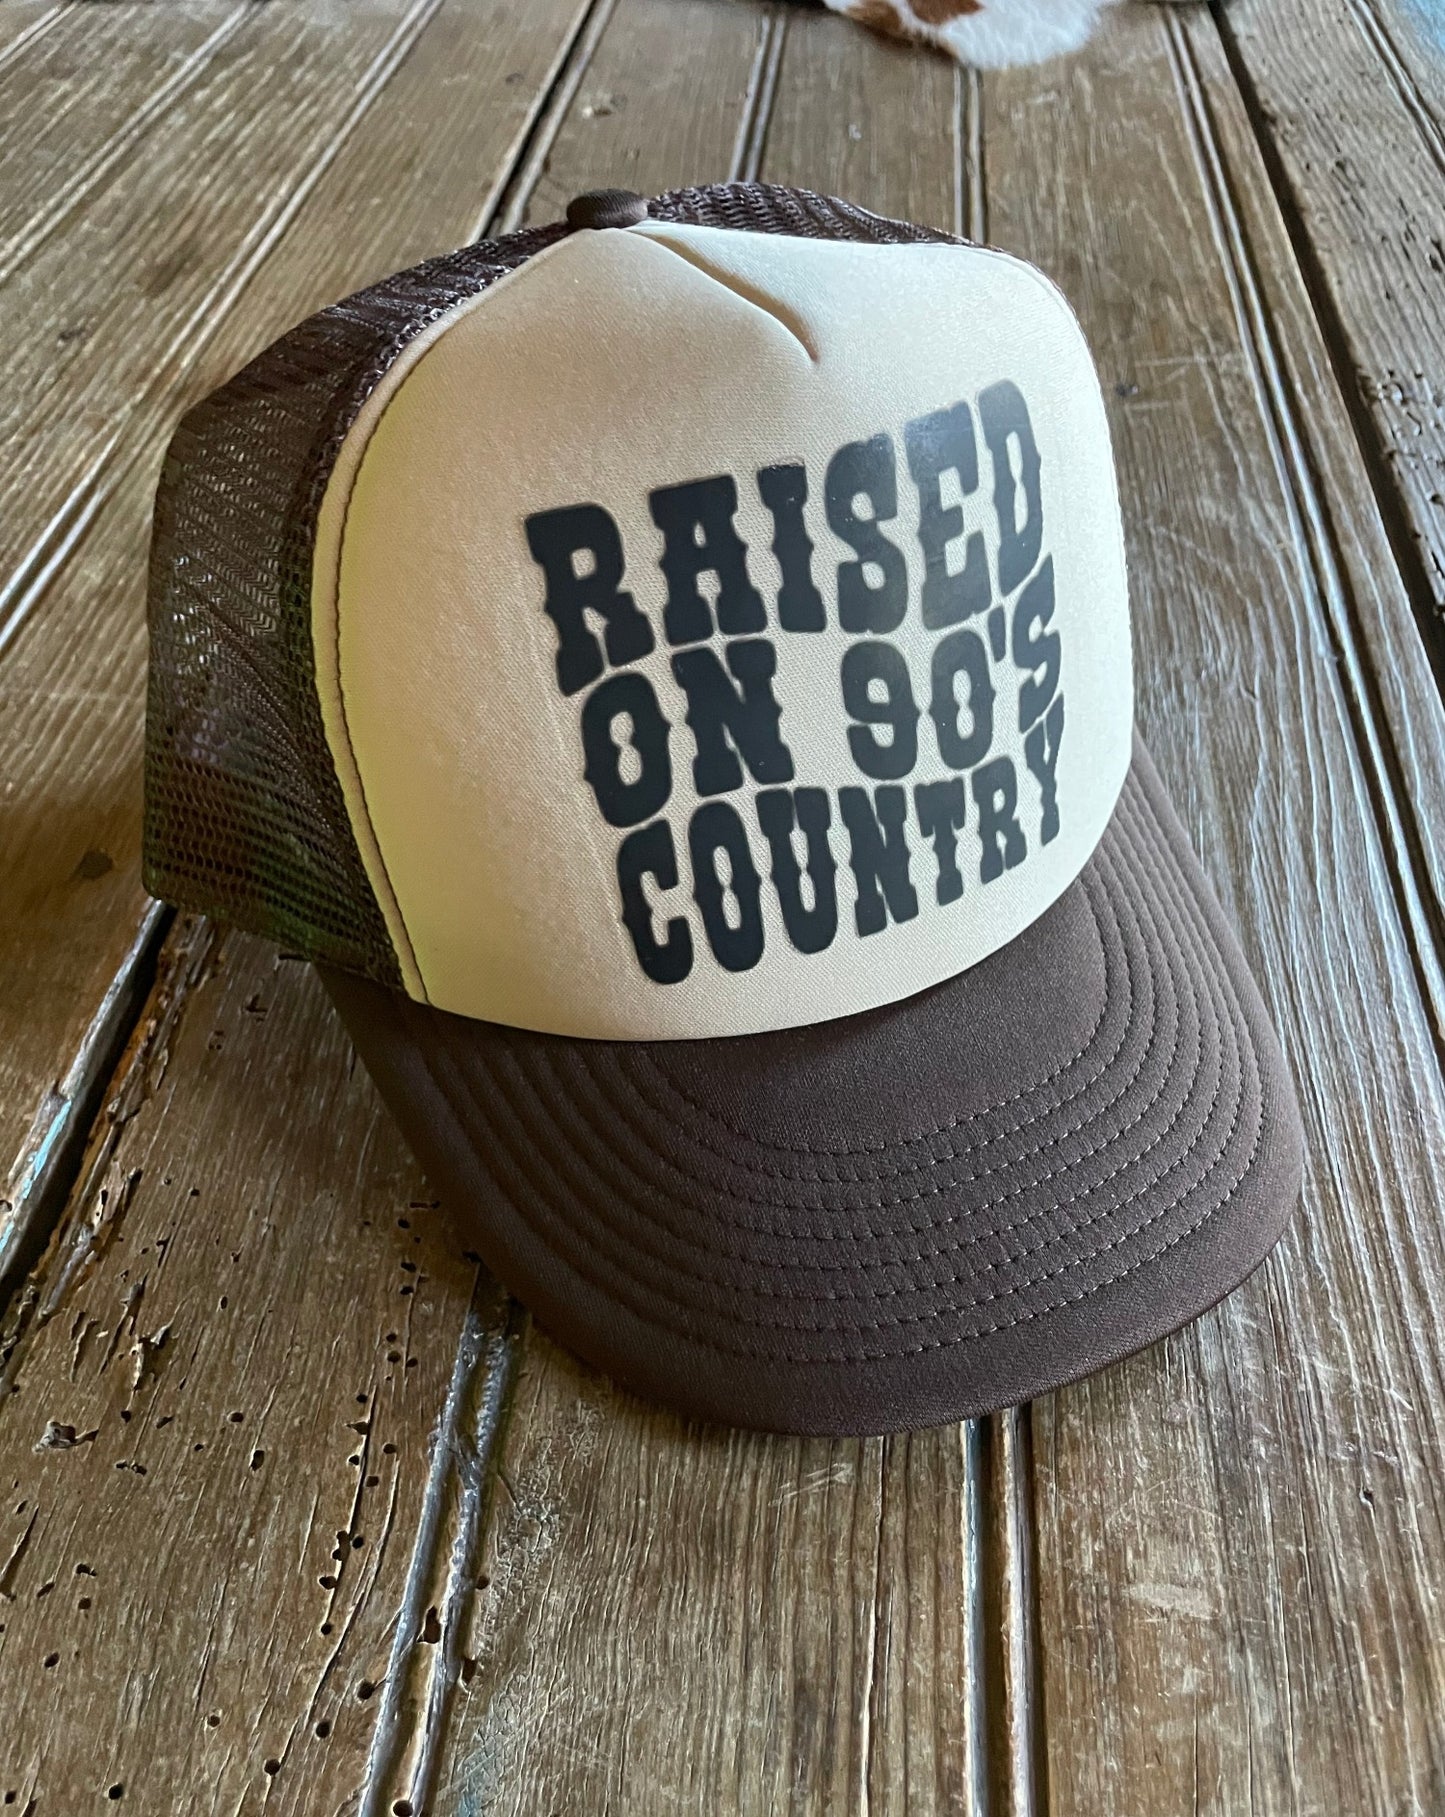 Raised on 90's Country Trucker Cap